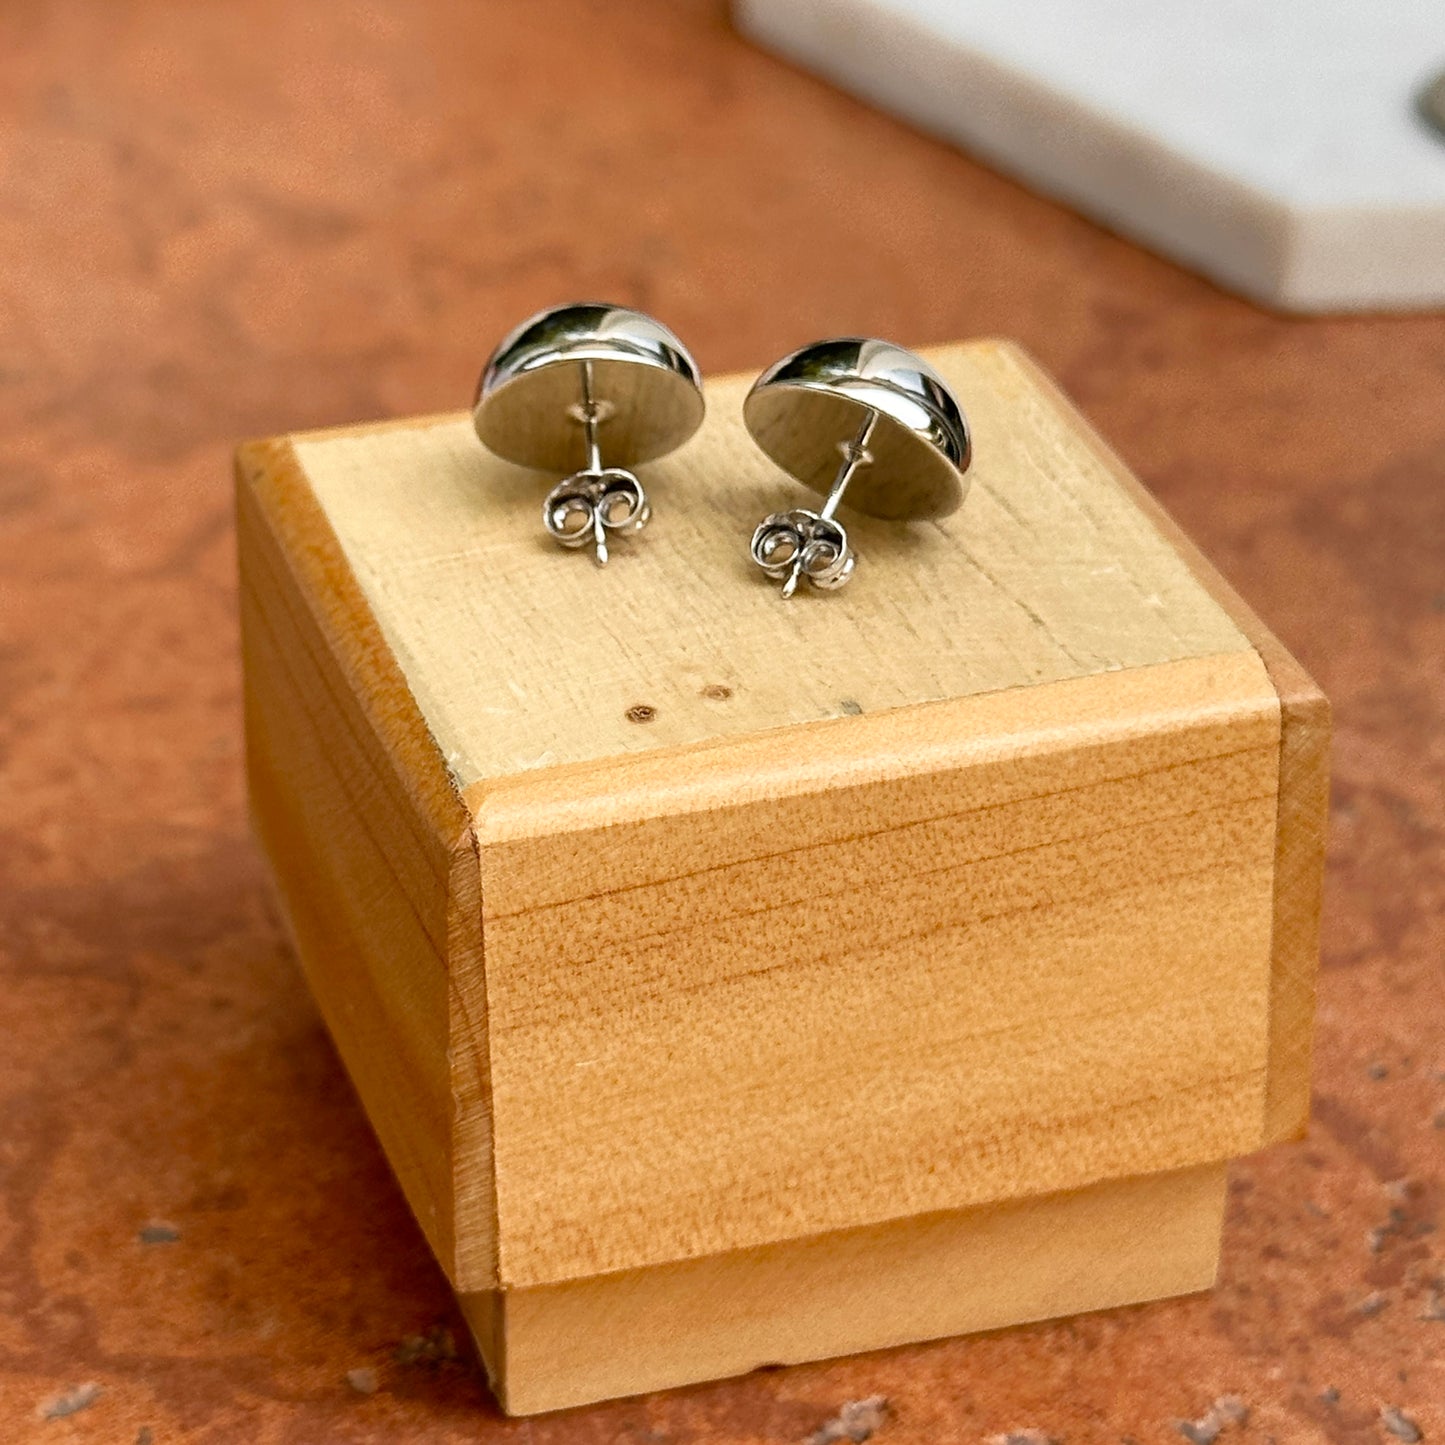 14KT White Gold Button Half-Ball Stud Earrings 12mm